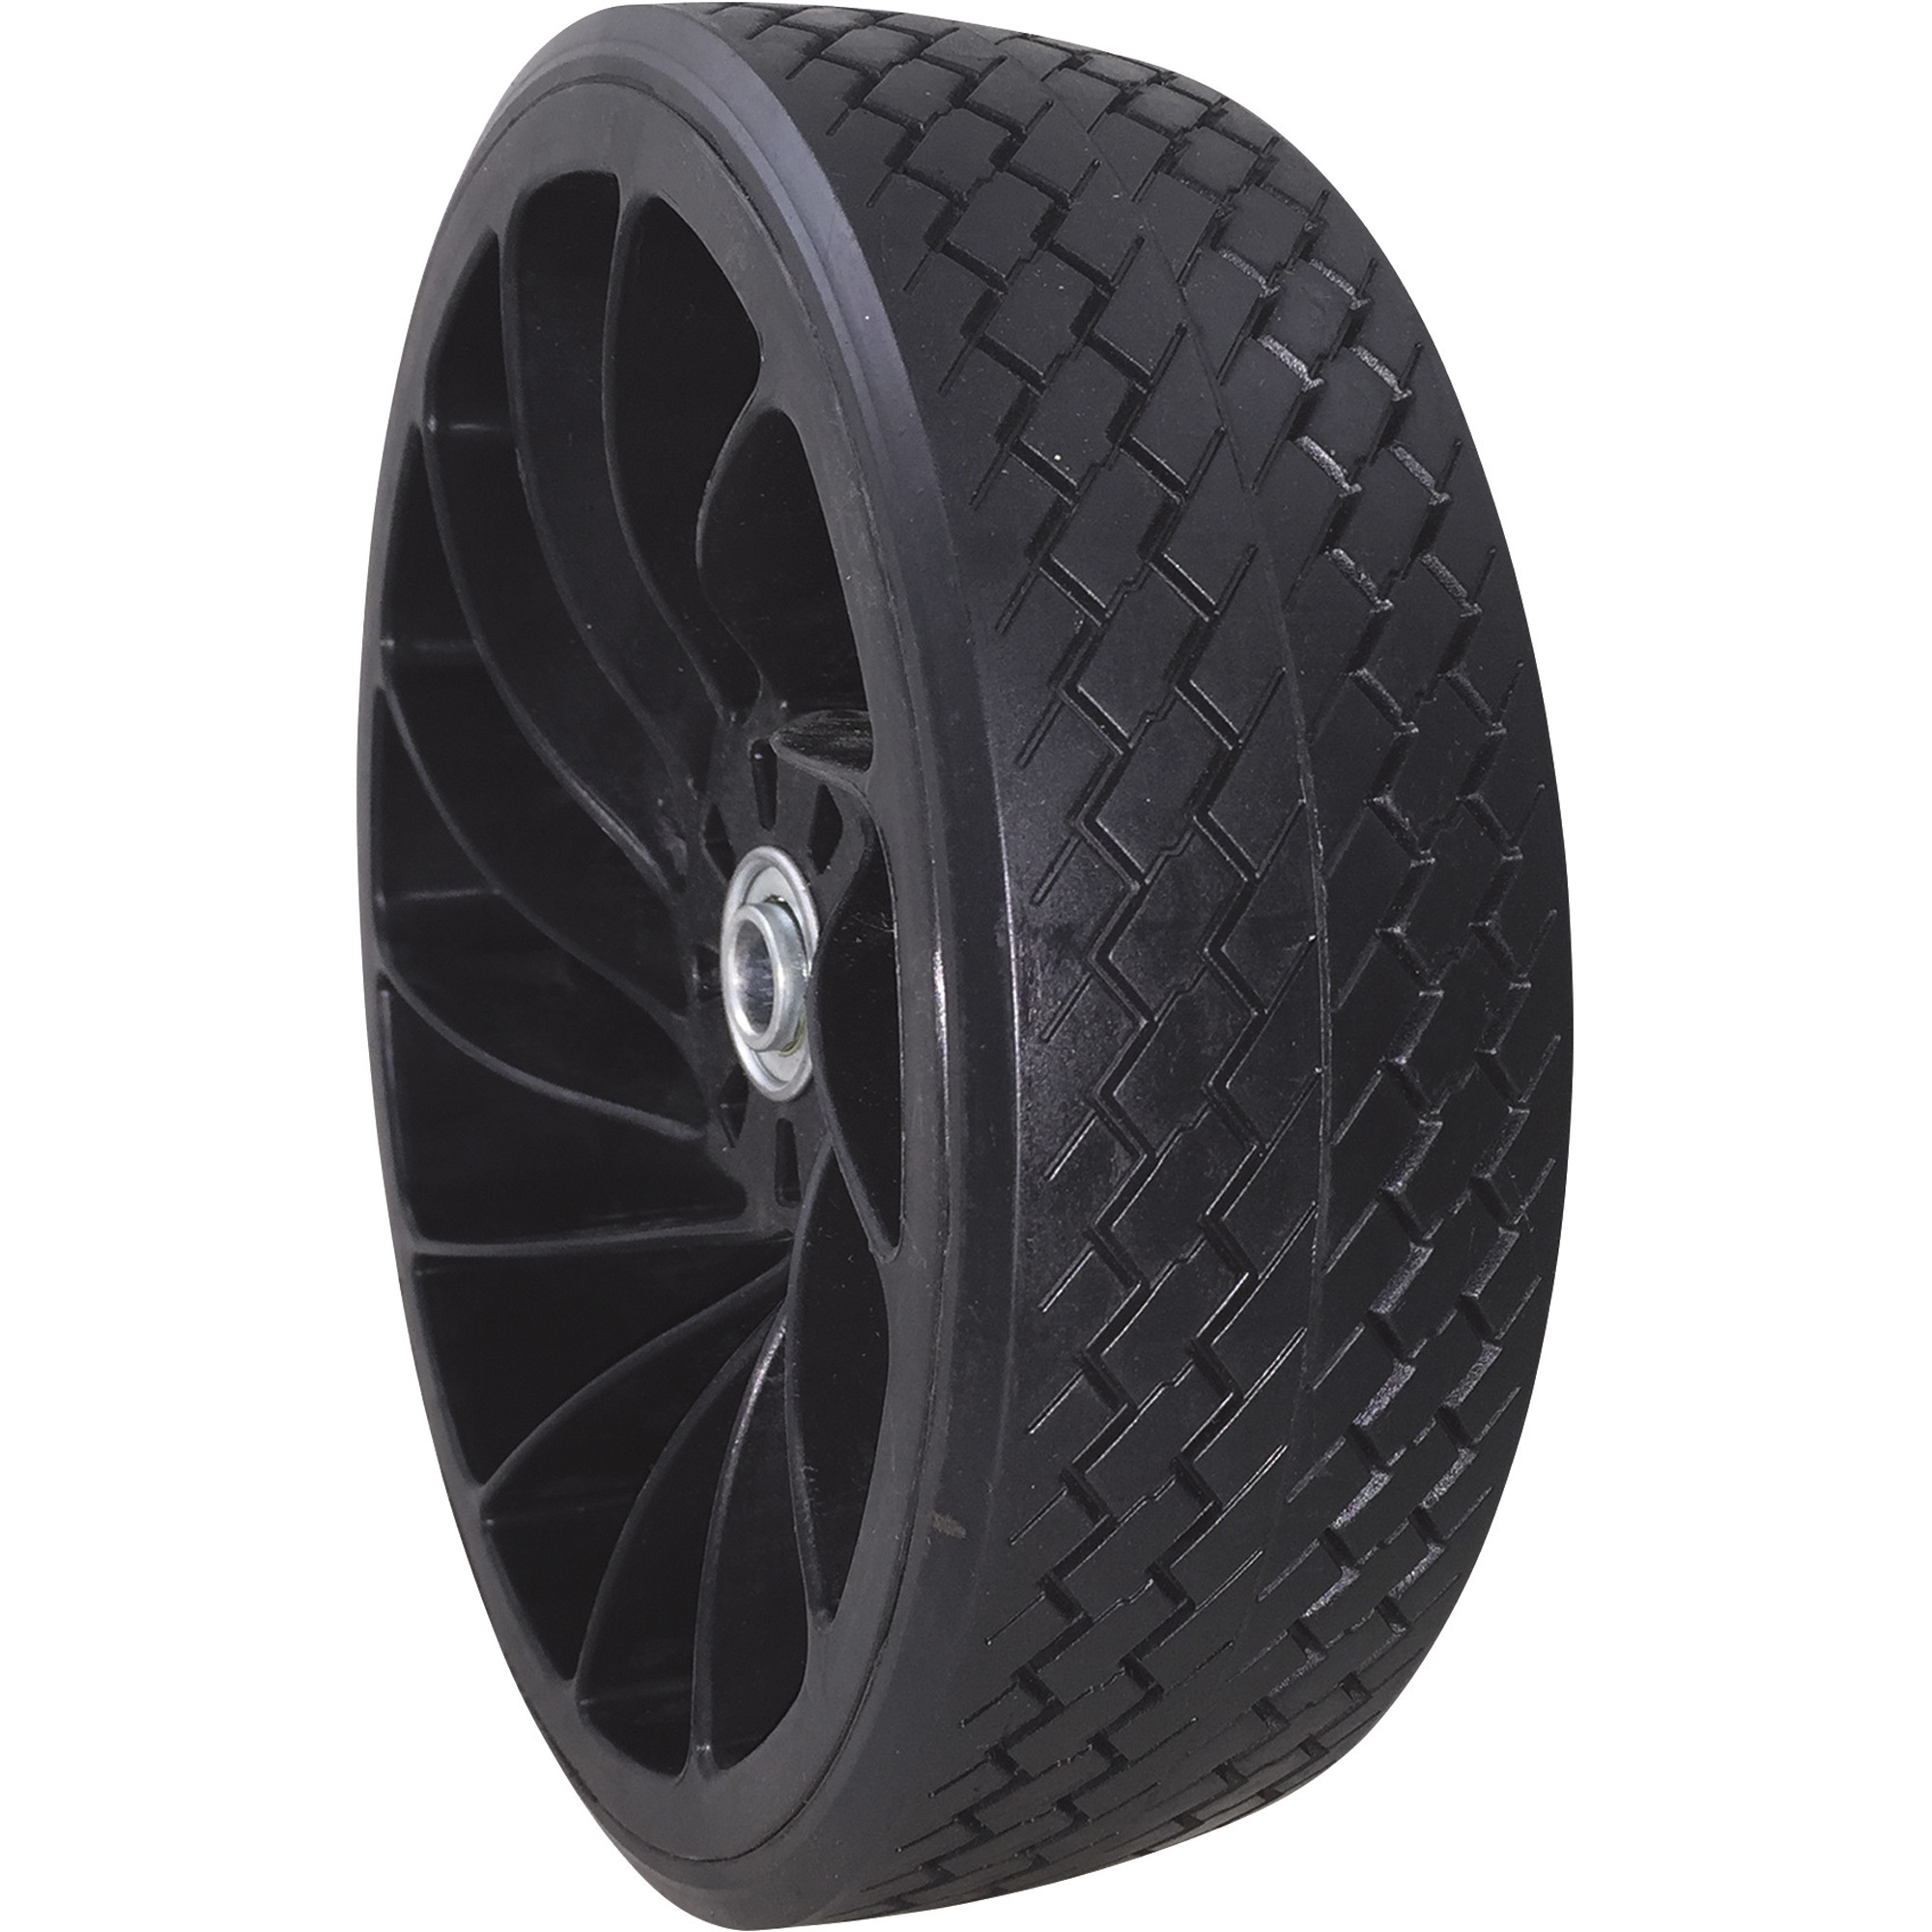 Marathon Tires Flat-Free Plastic Flex Wheel with Rubber Tread â 3/4Inch Bore, 4.10/3.50â4Inch